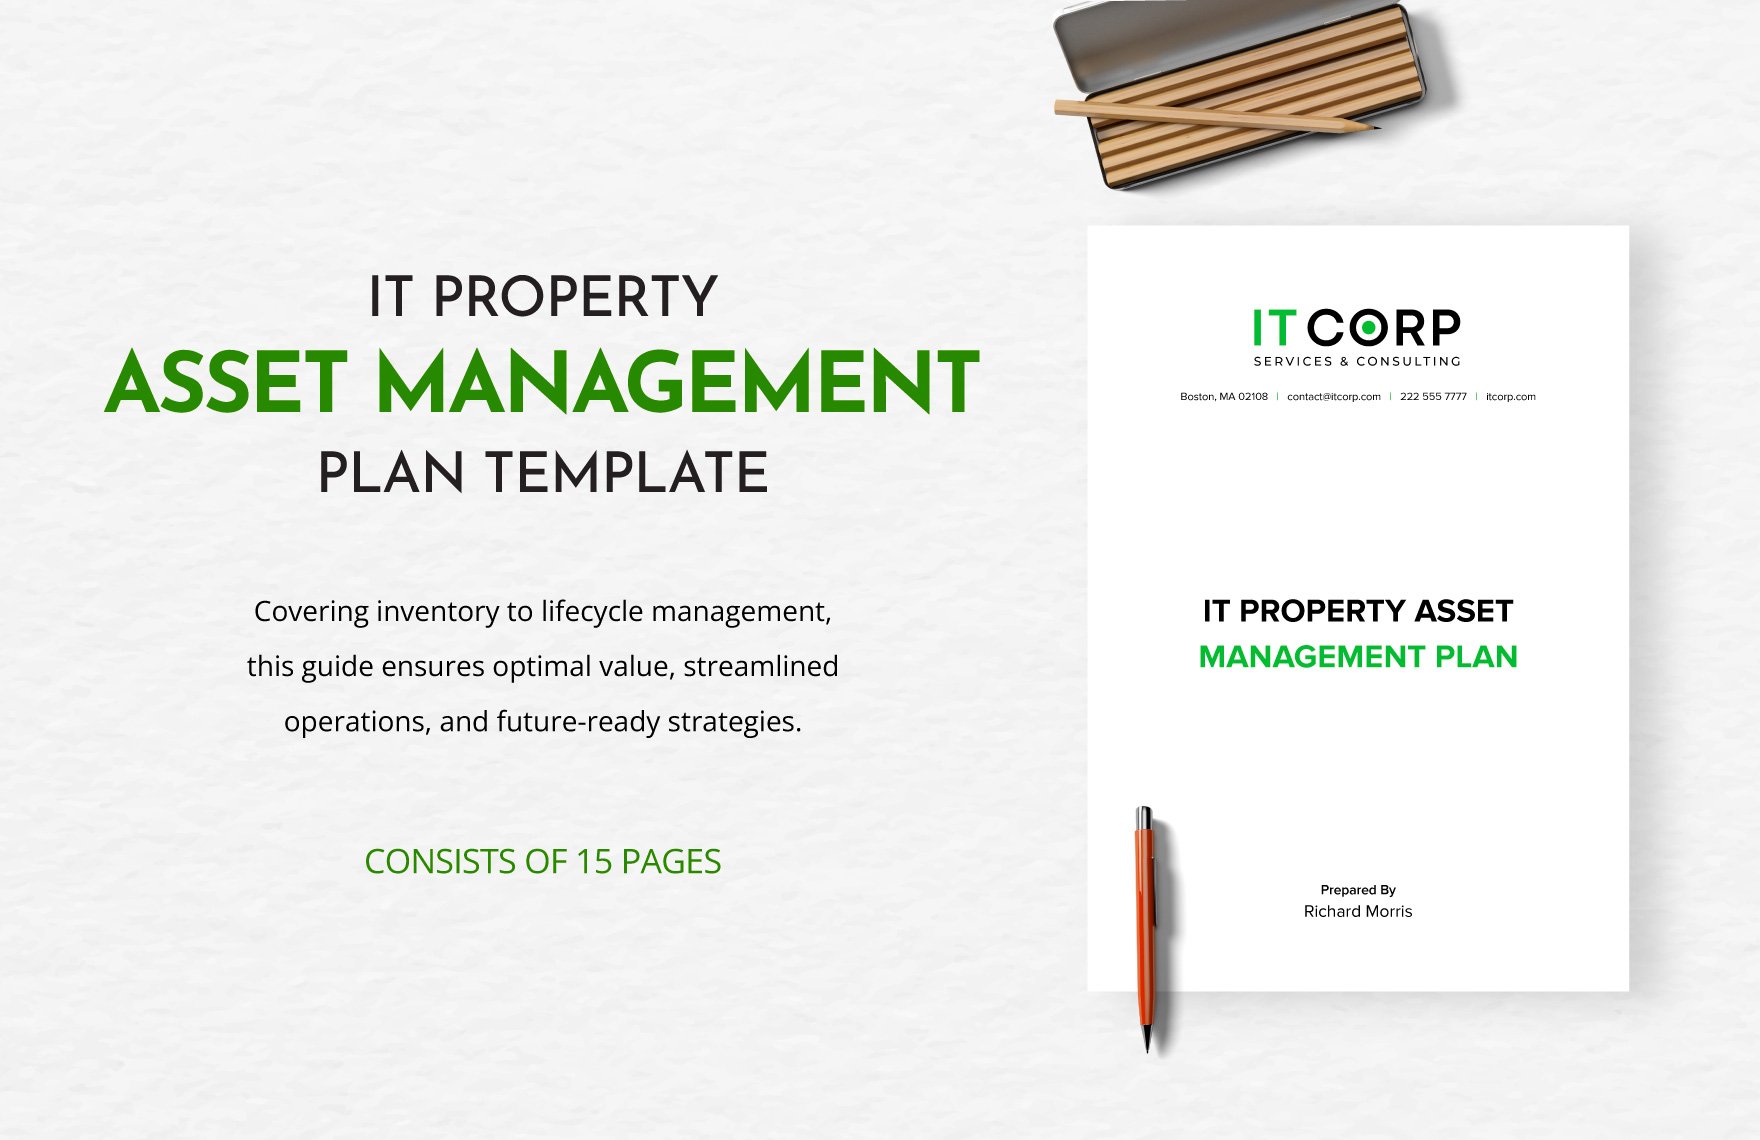 IT Property Asset Management Plan Template